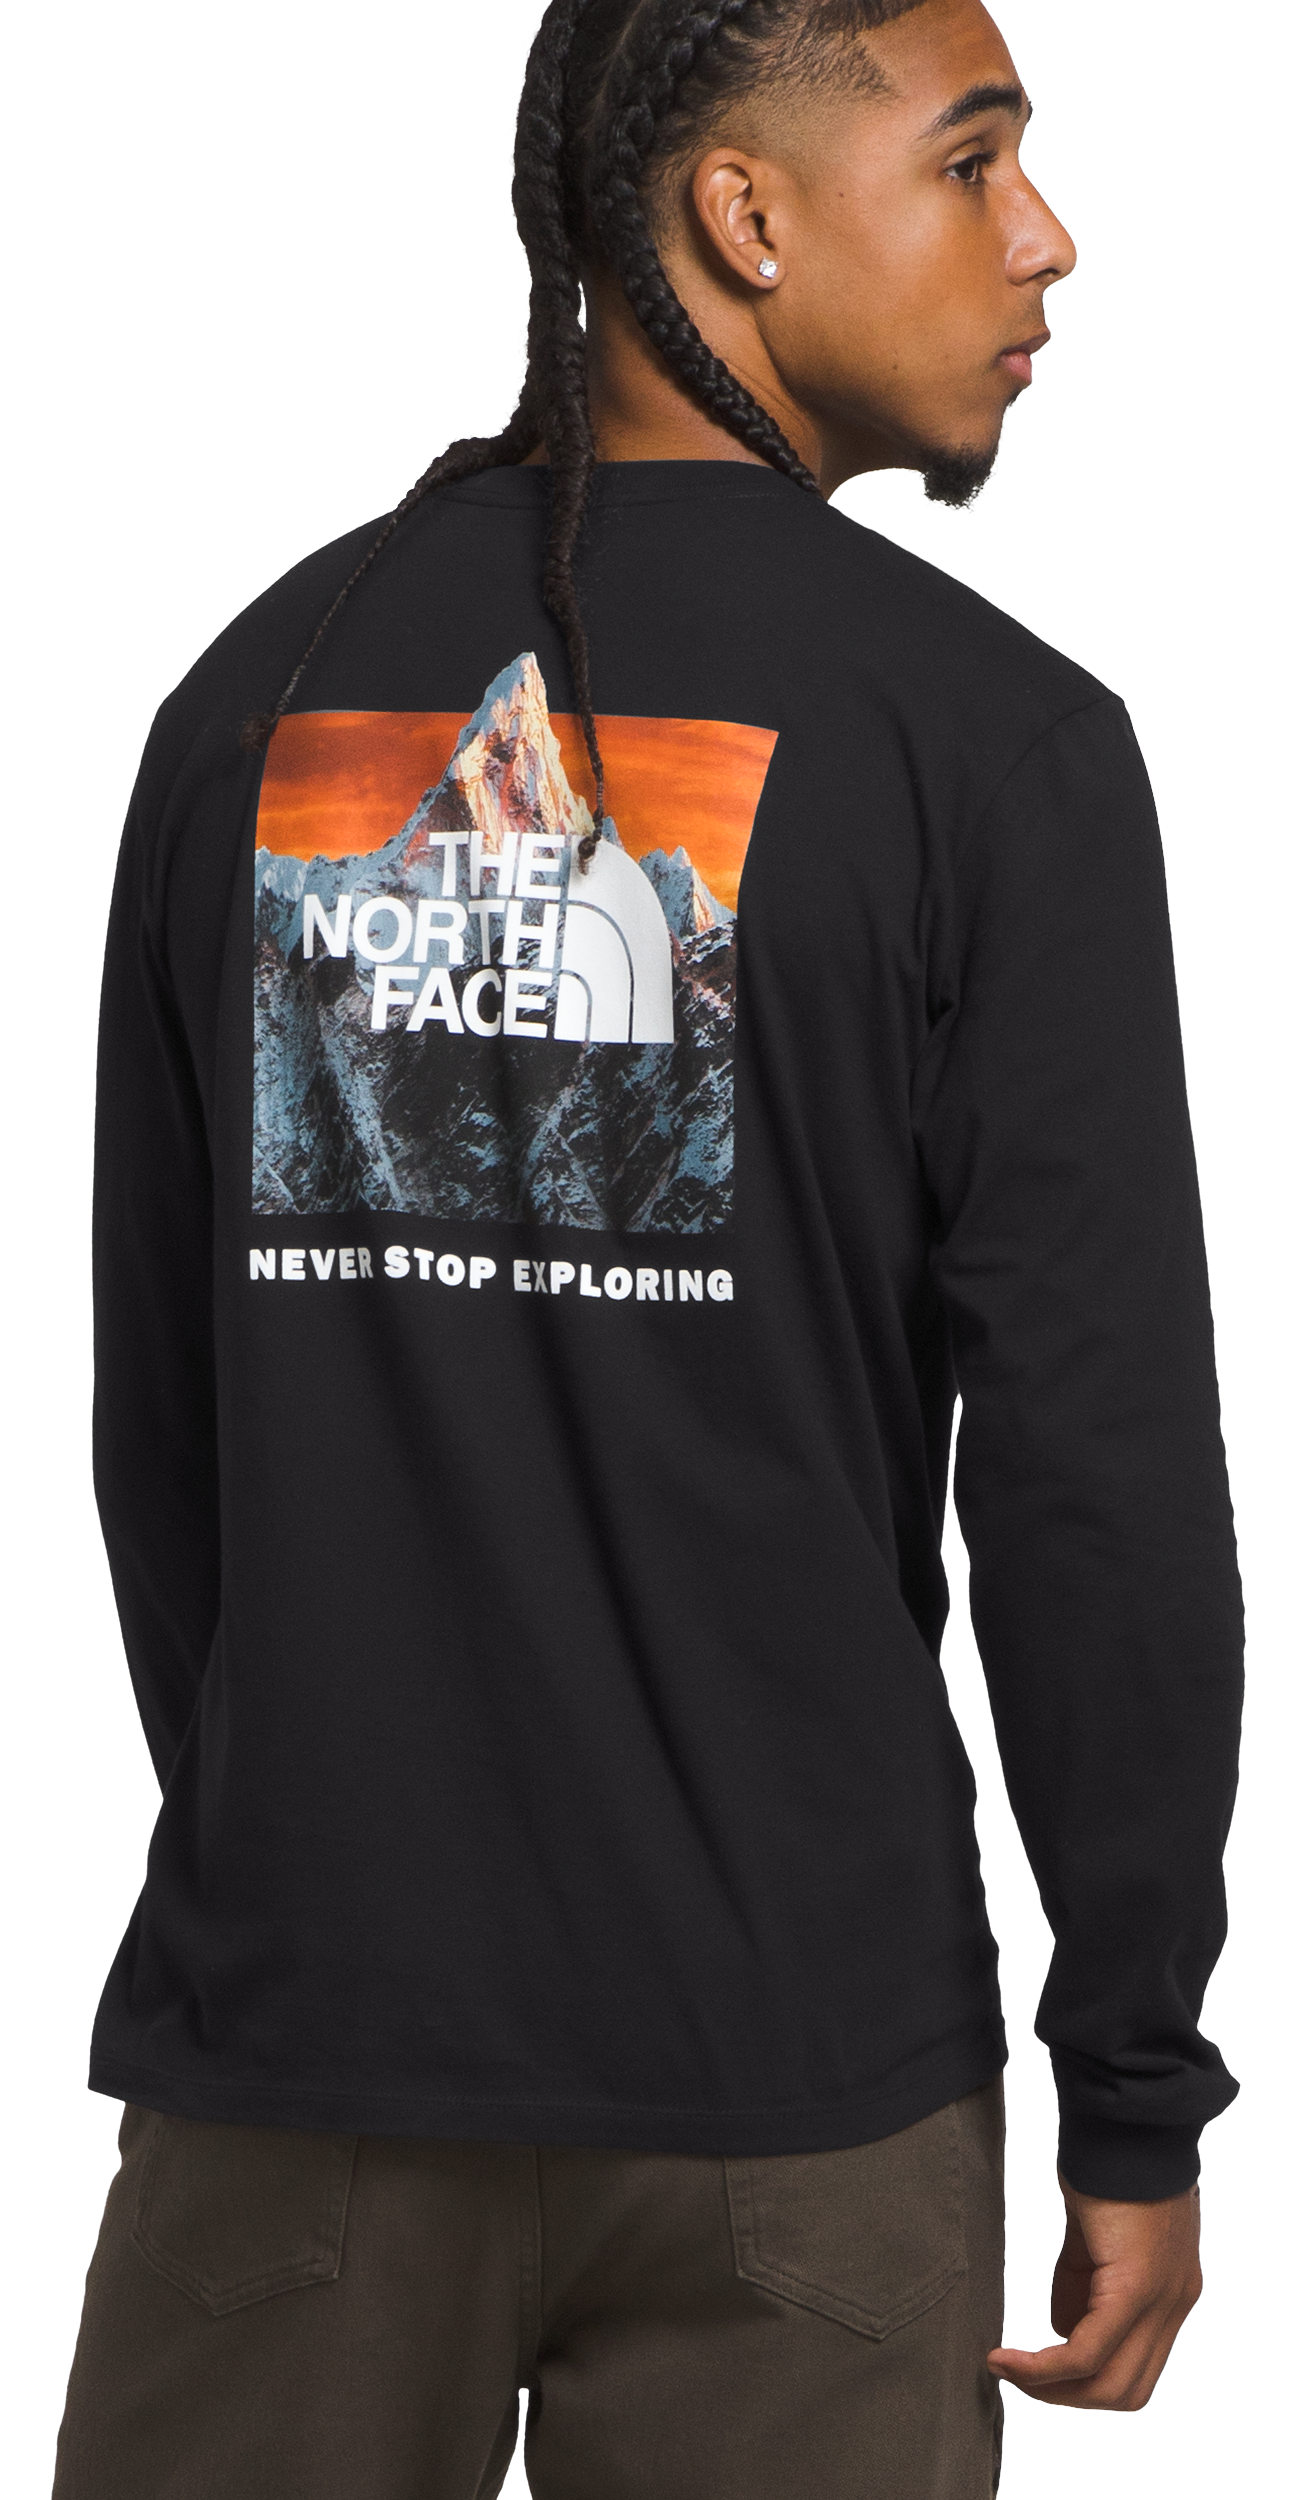 The North Face Box NSE Long-Sleeve Shirt for Men - TNF Black/Photo Real - 2XL